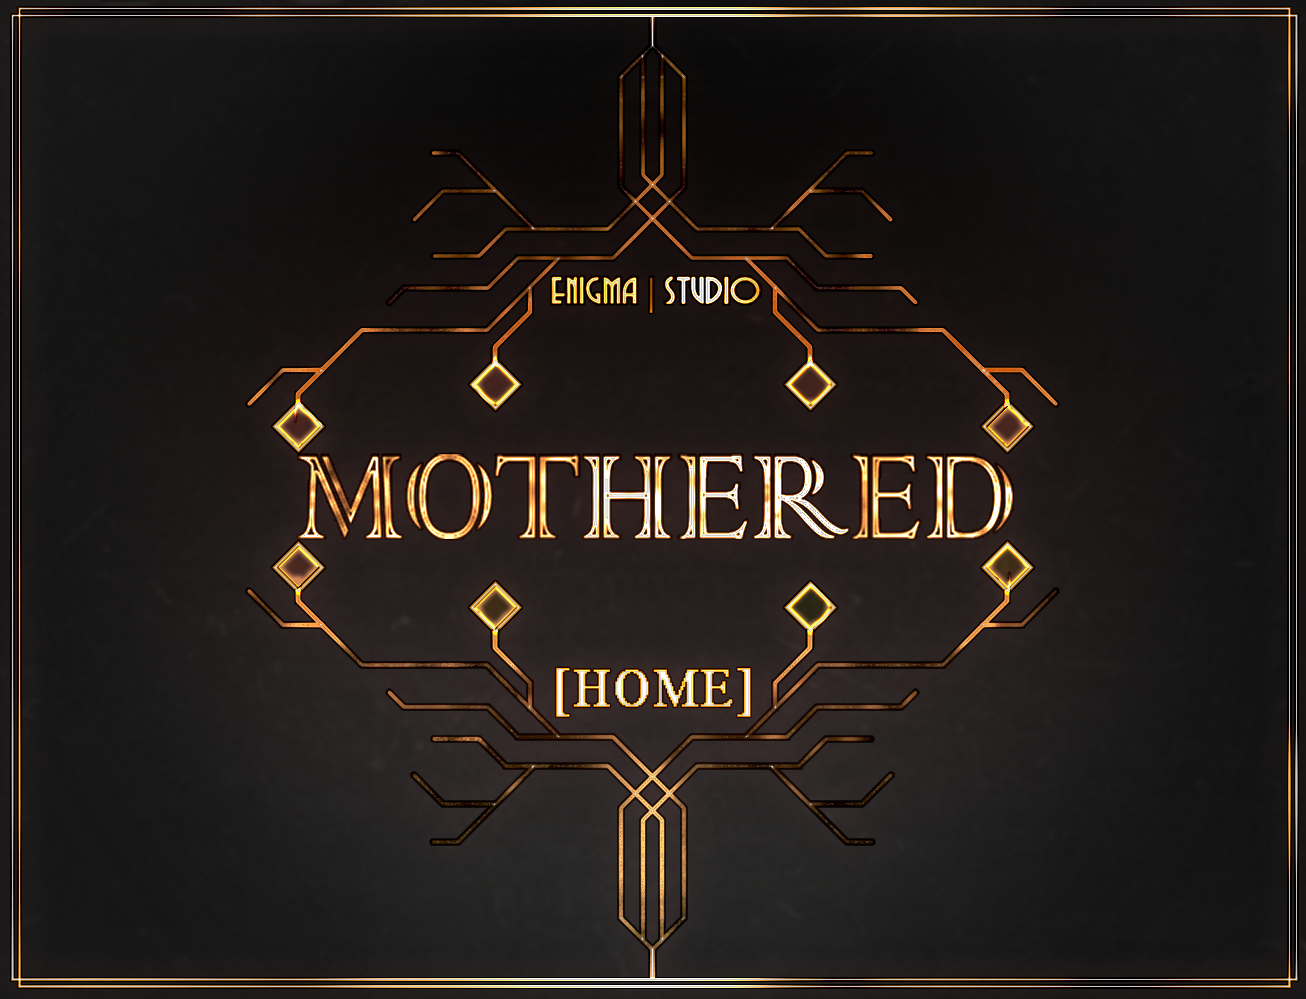 MOTHERED - DEMO + [HOME]